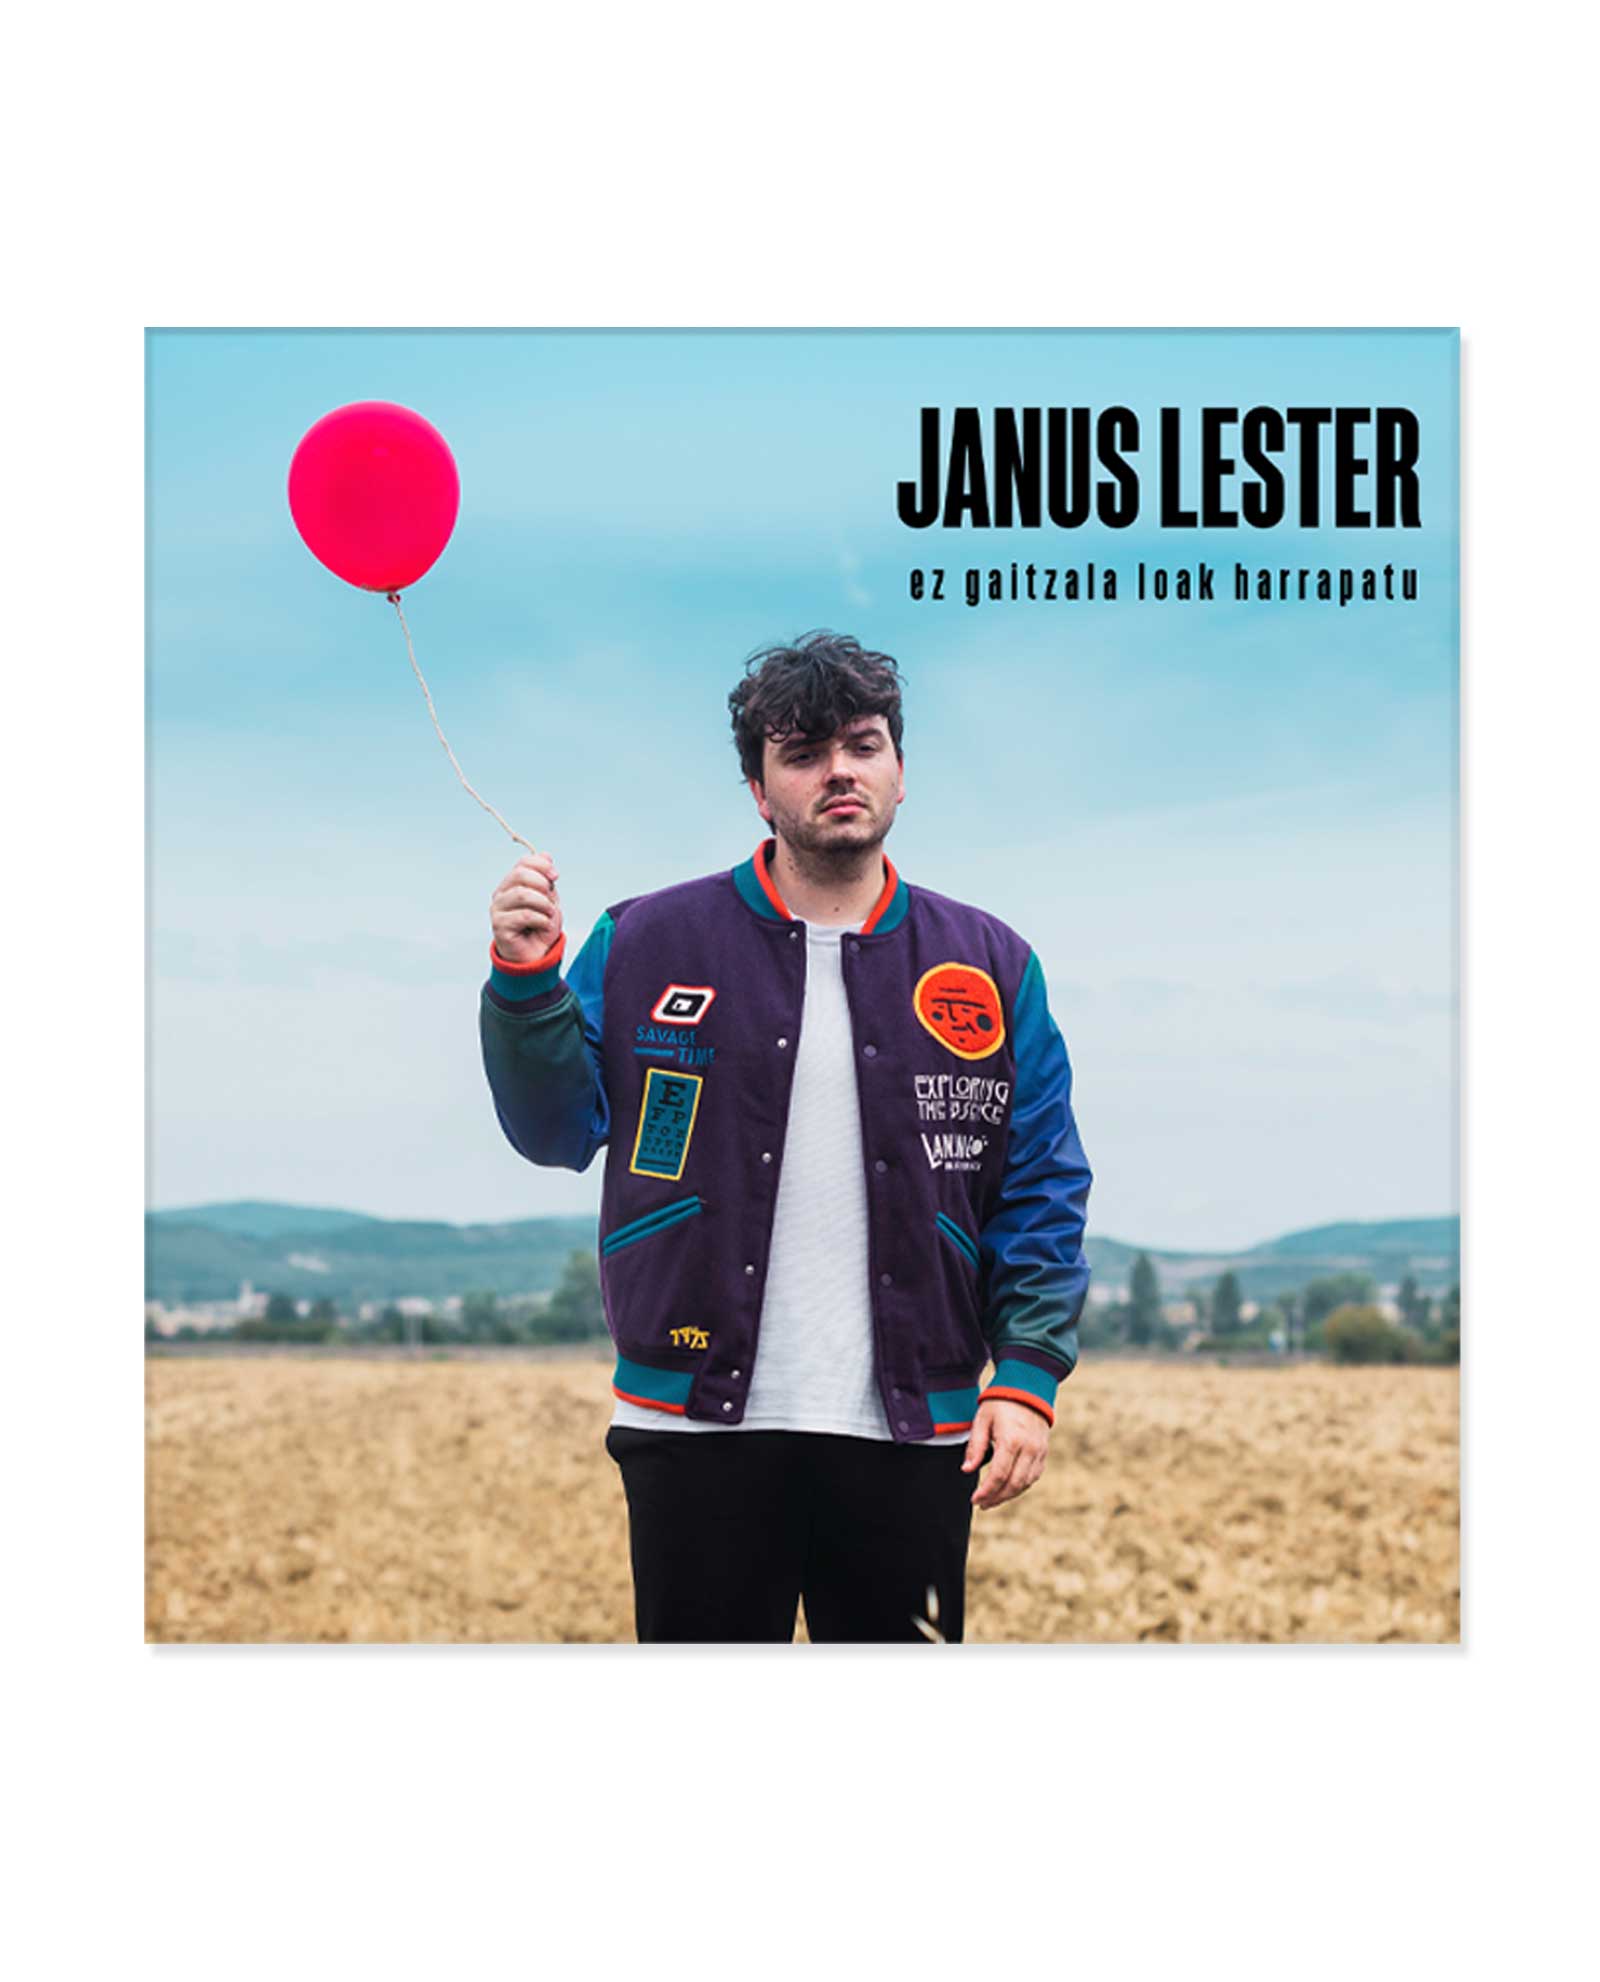 Janus Lester - CD Ez gaitzala loak harrapatu - Rocktud - Janus Lester